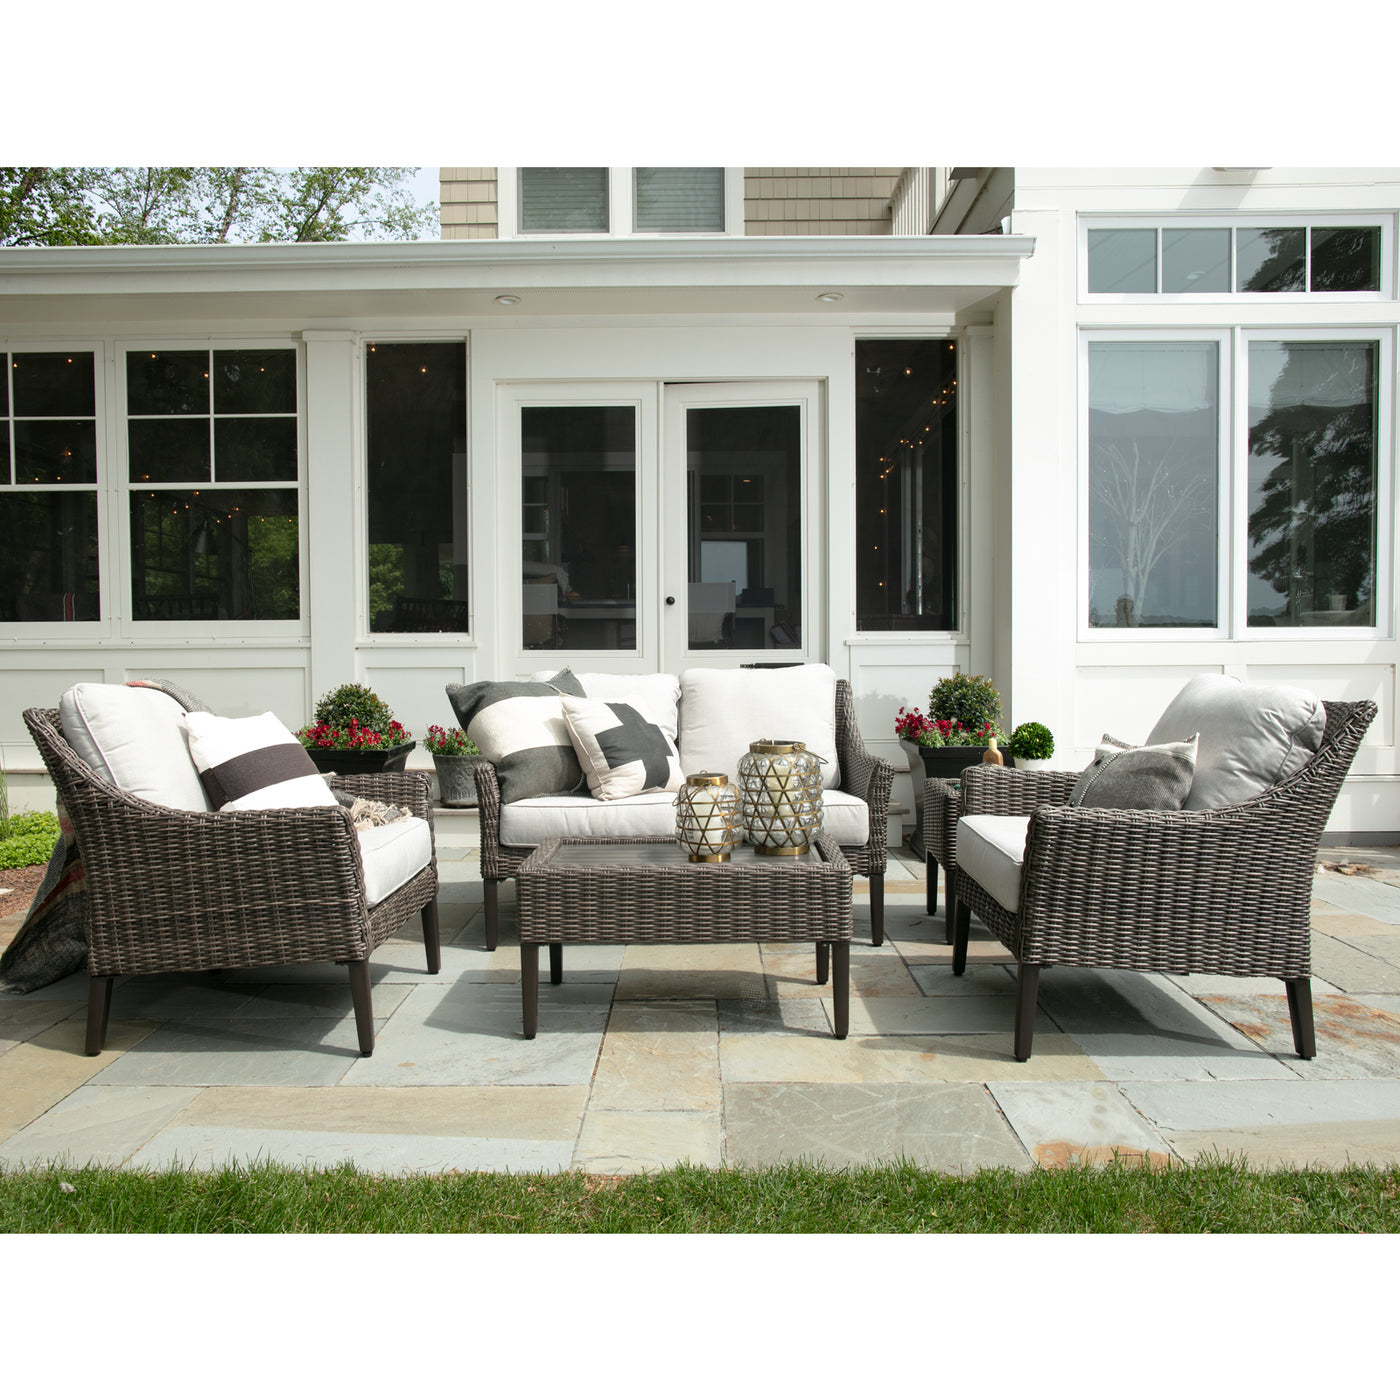  Yardbird Harriet Outdoor Loveseat Set with Fixed Chairs Outdoor Furniture